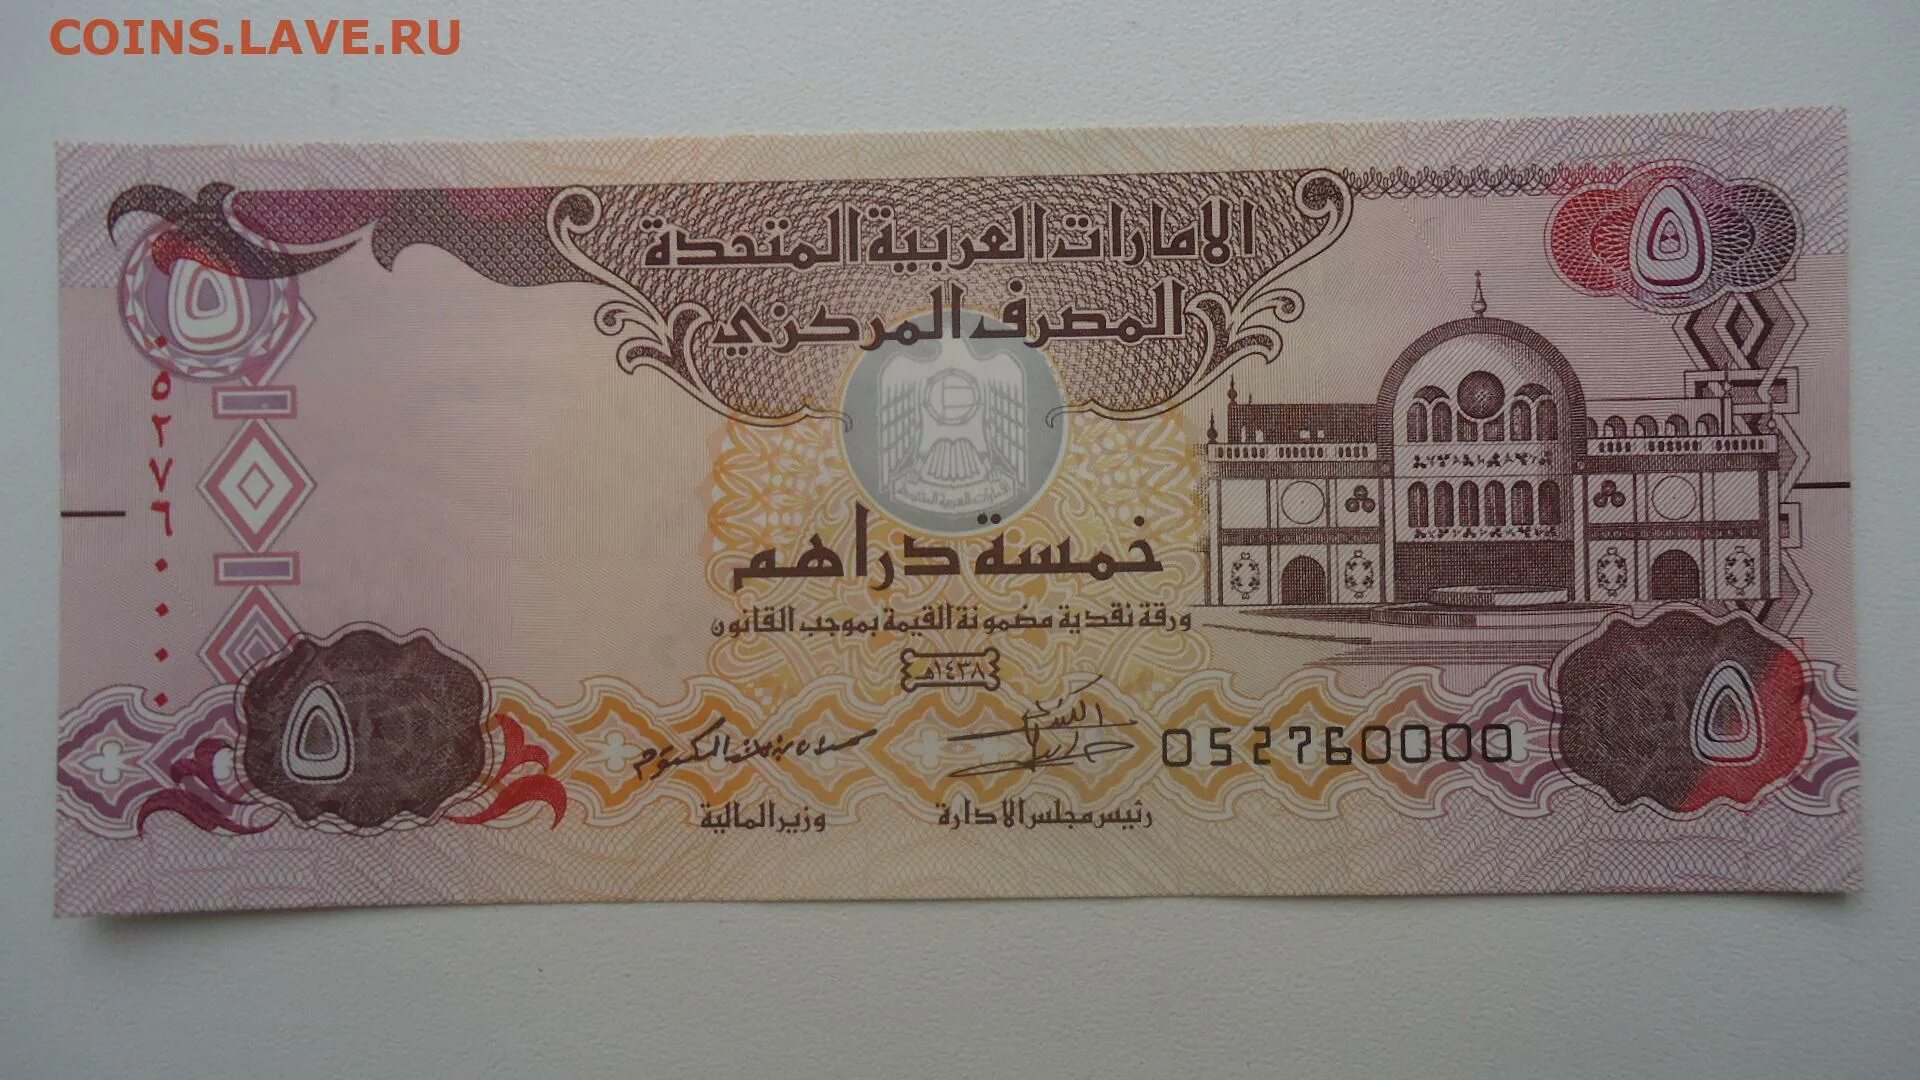 1600 дирхам. 5 Дирхам ОАЭ. Банкнота ОАЭ 10 дирхам. 25 Дирхам Объединенные арабские эмираты. Дирхам ОАЭ К доллару США.